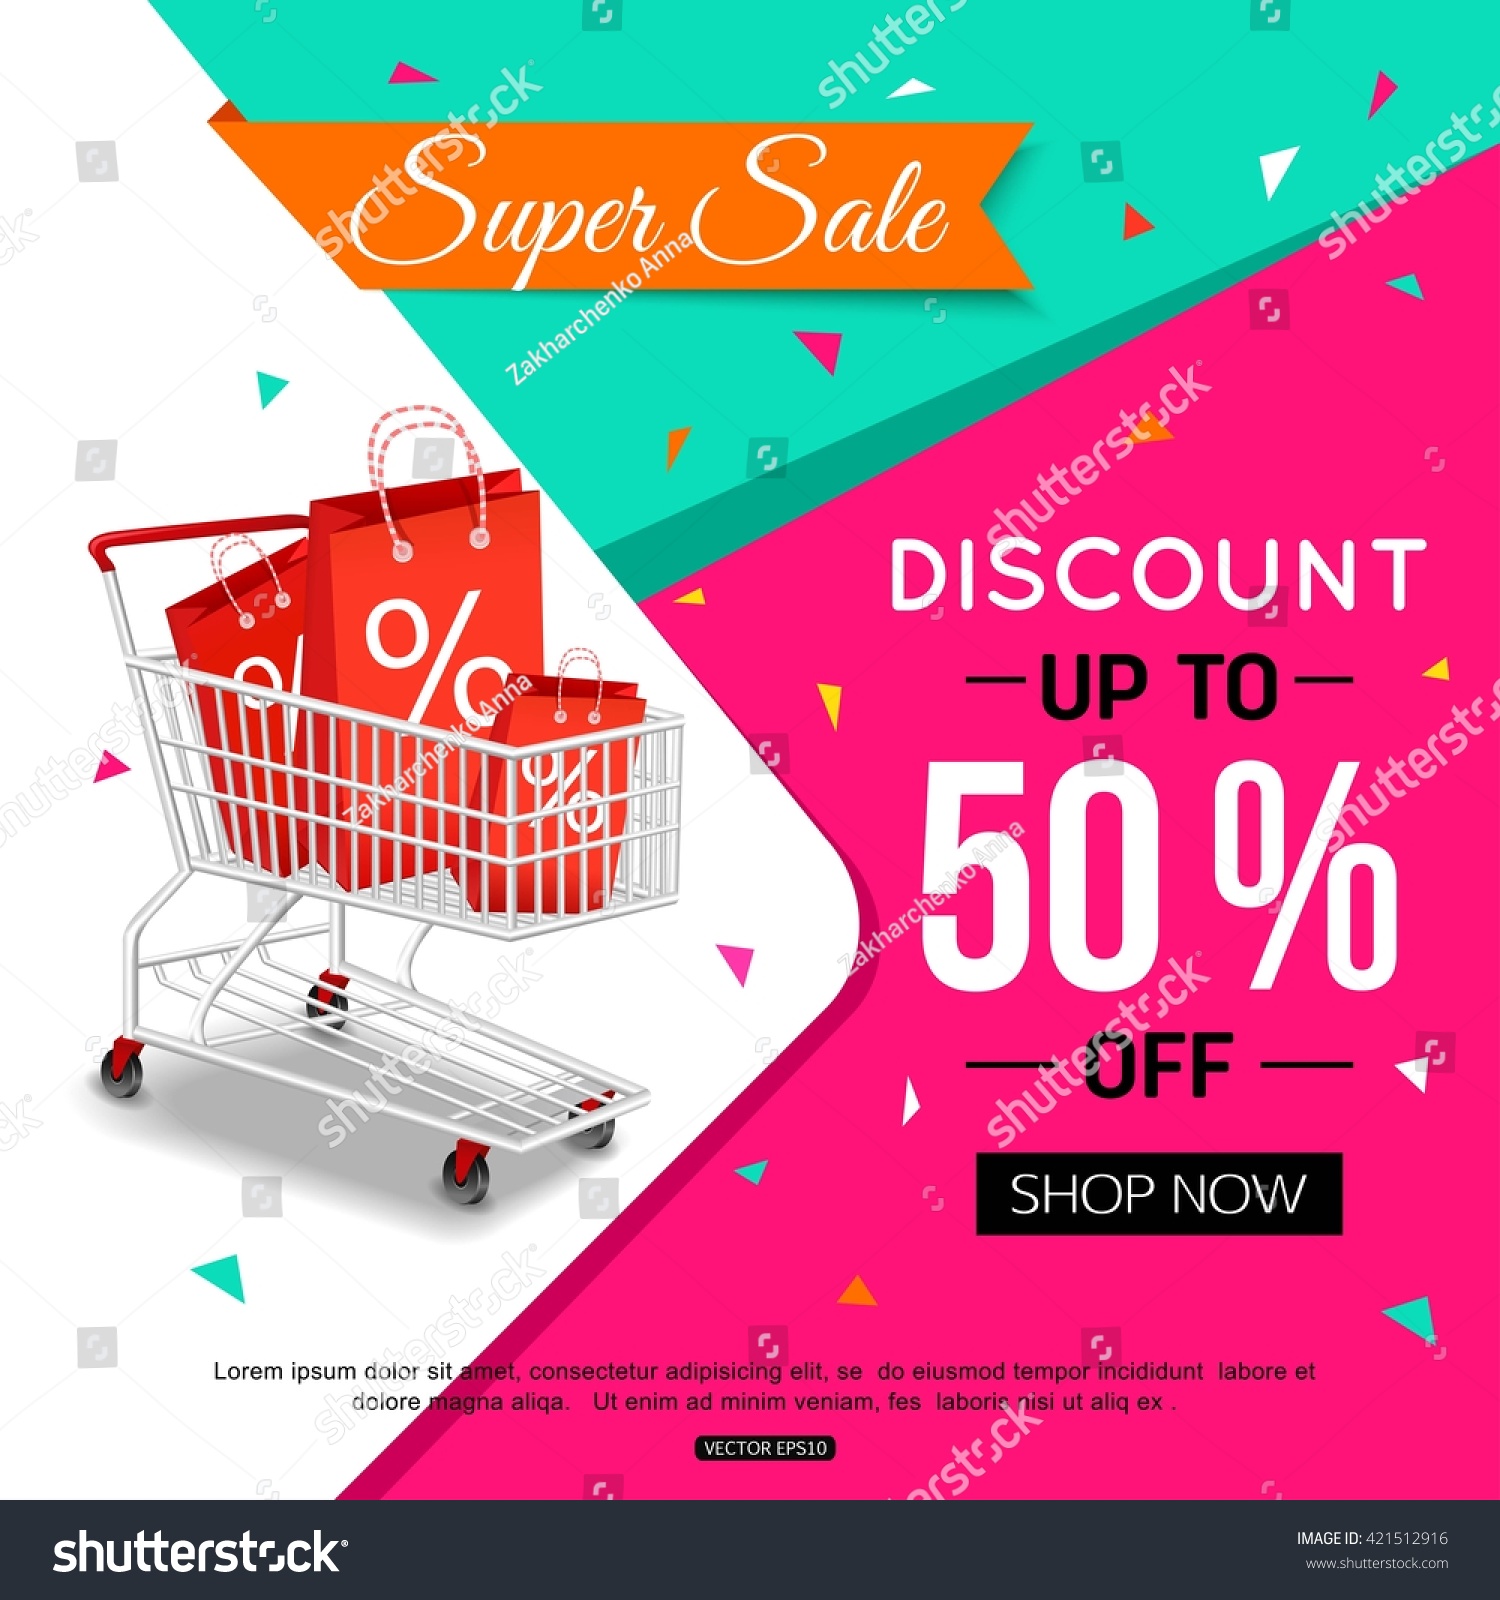 stock-vector-super-sale-banner-design-for-shop-online-store-discount-up-to-off-shop-now-vector-421512916.jpg